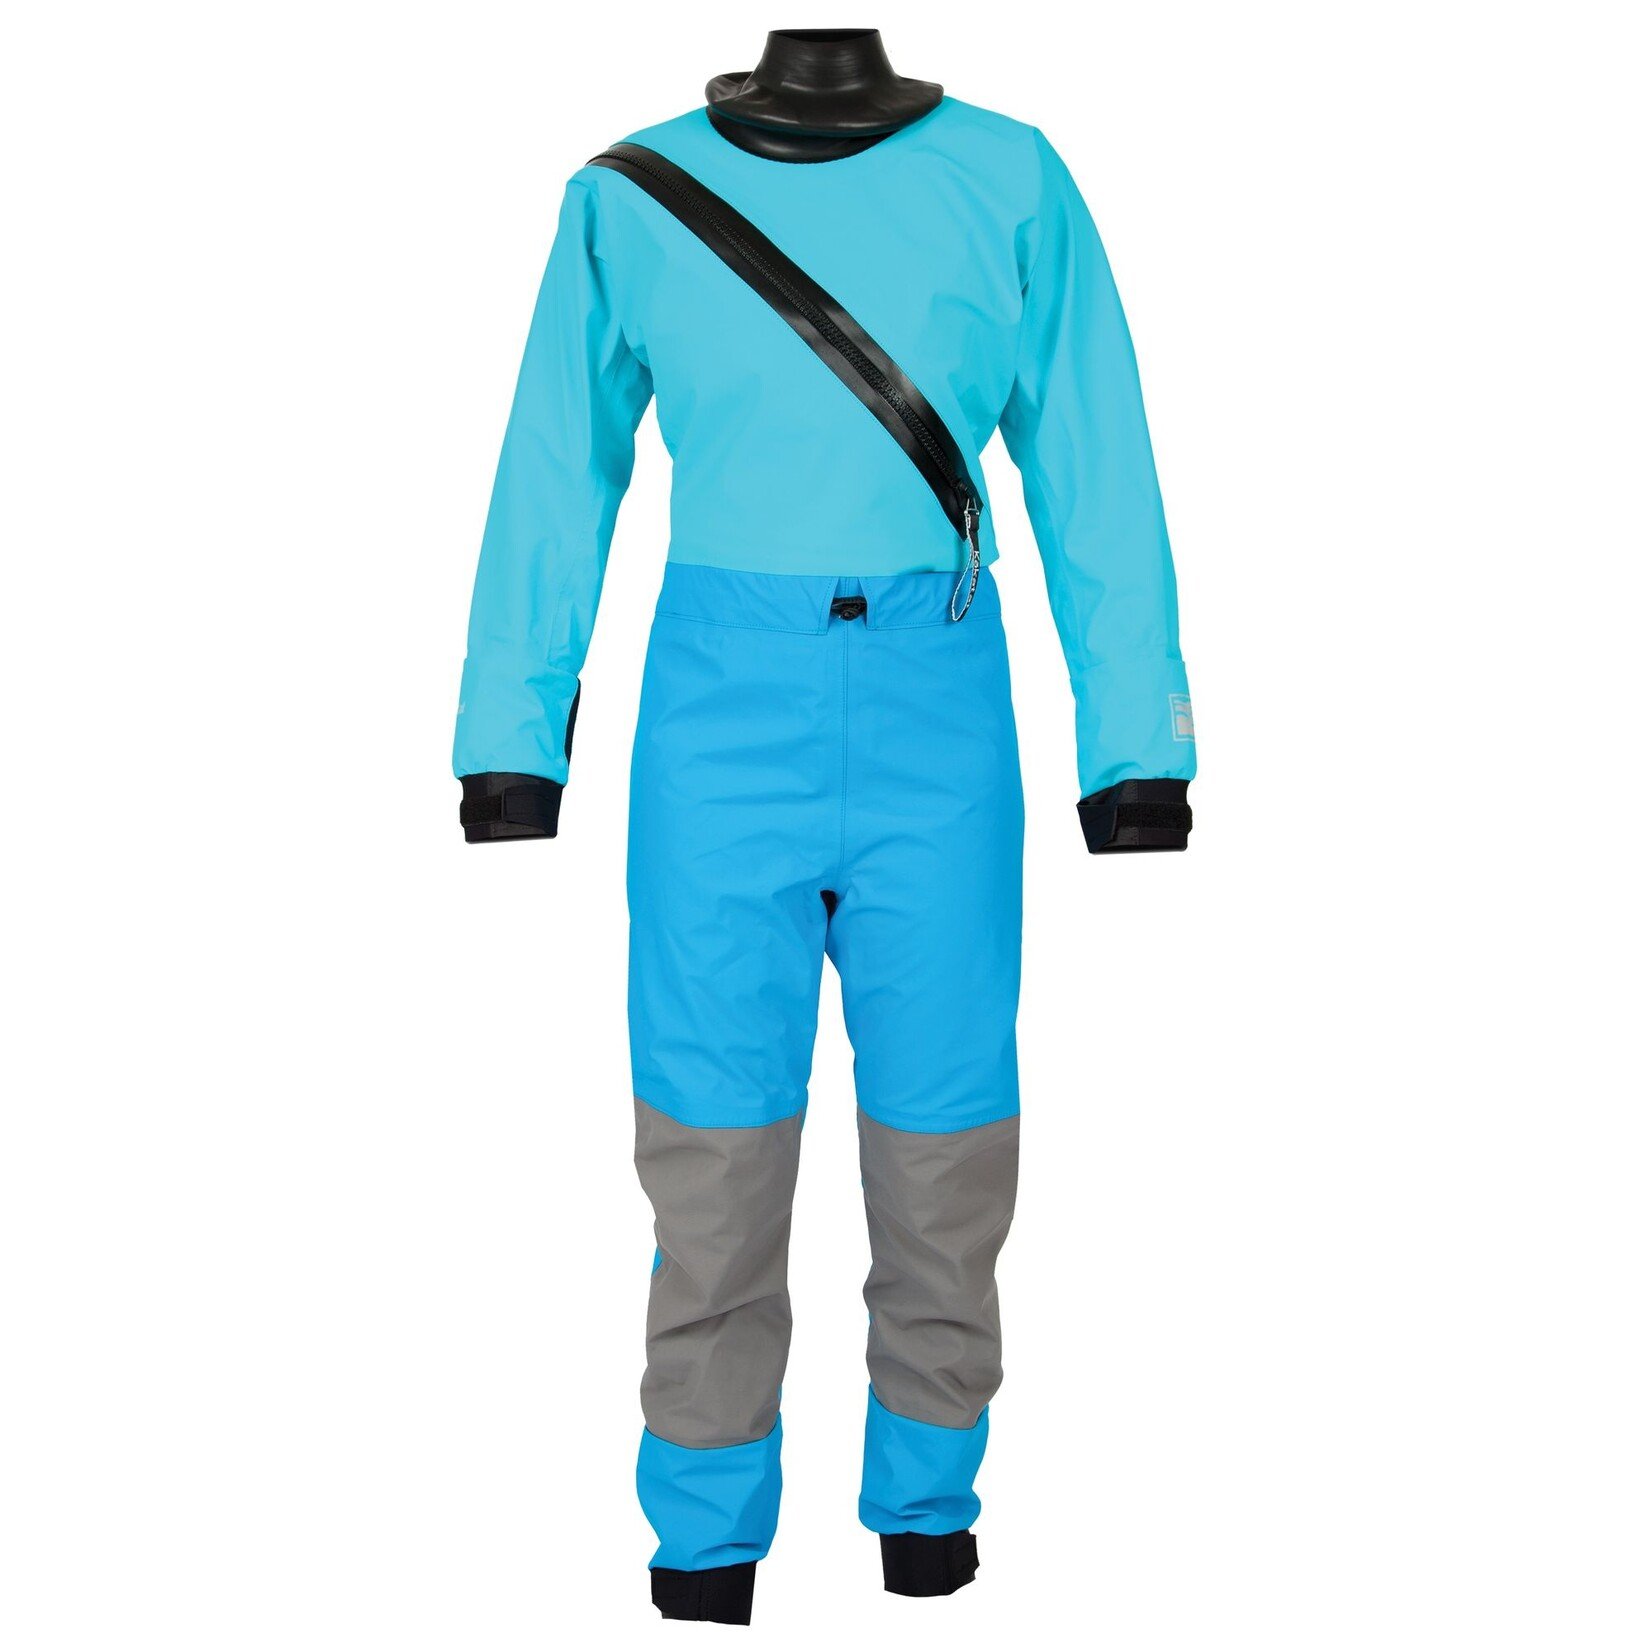 Kokatat Women's Hydrus 3.0 Swift Entry Dry Suit, Reef, Small